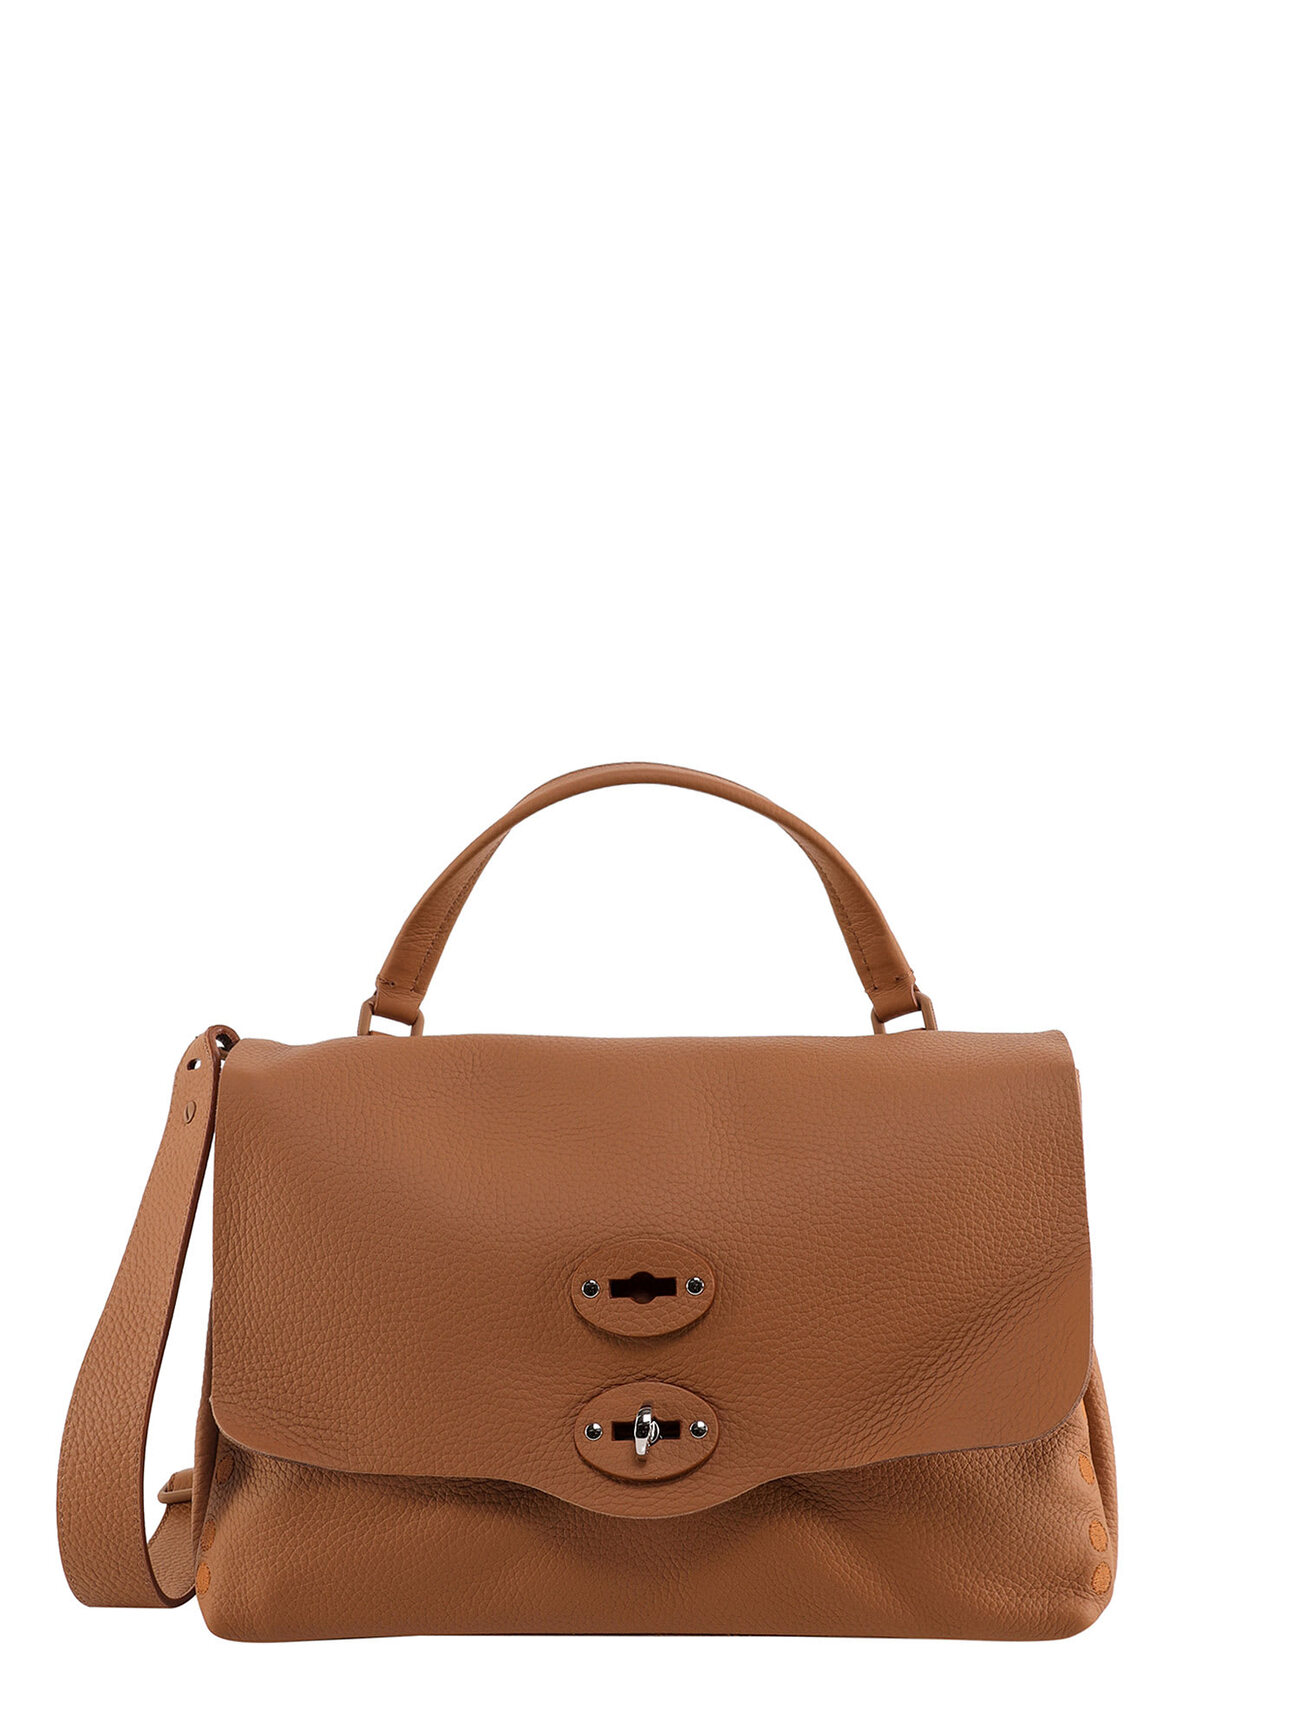 Zanellato Postina Handbag in brown